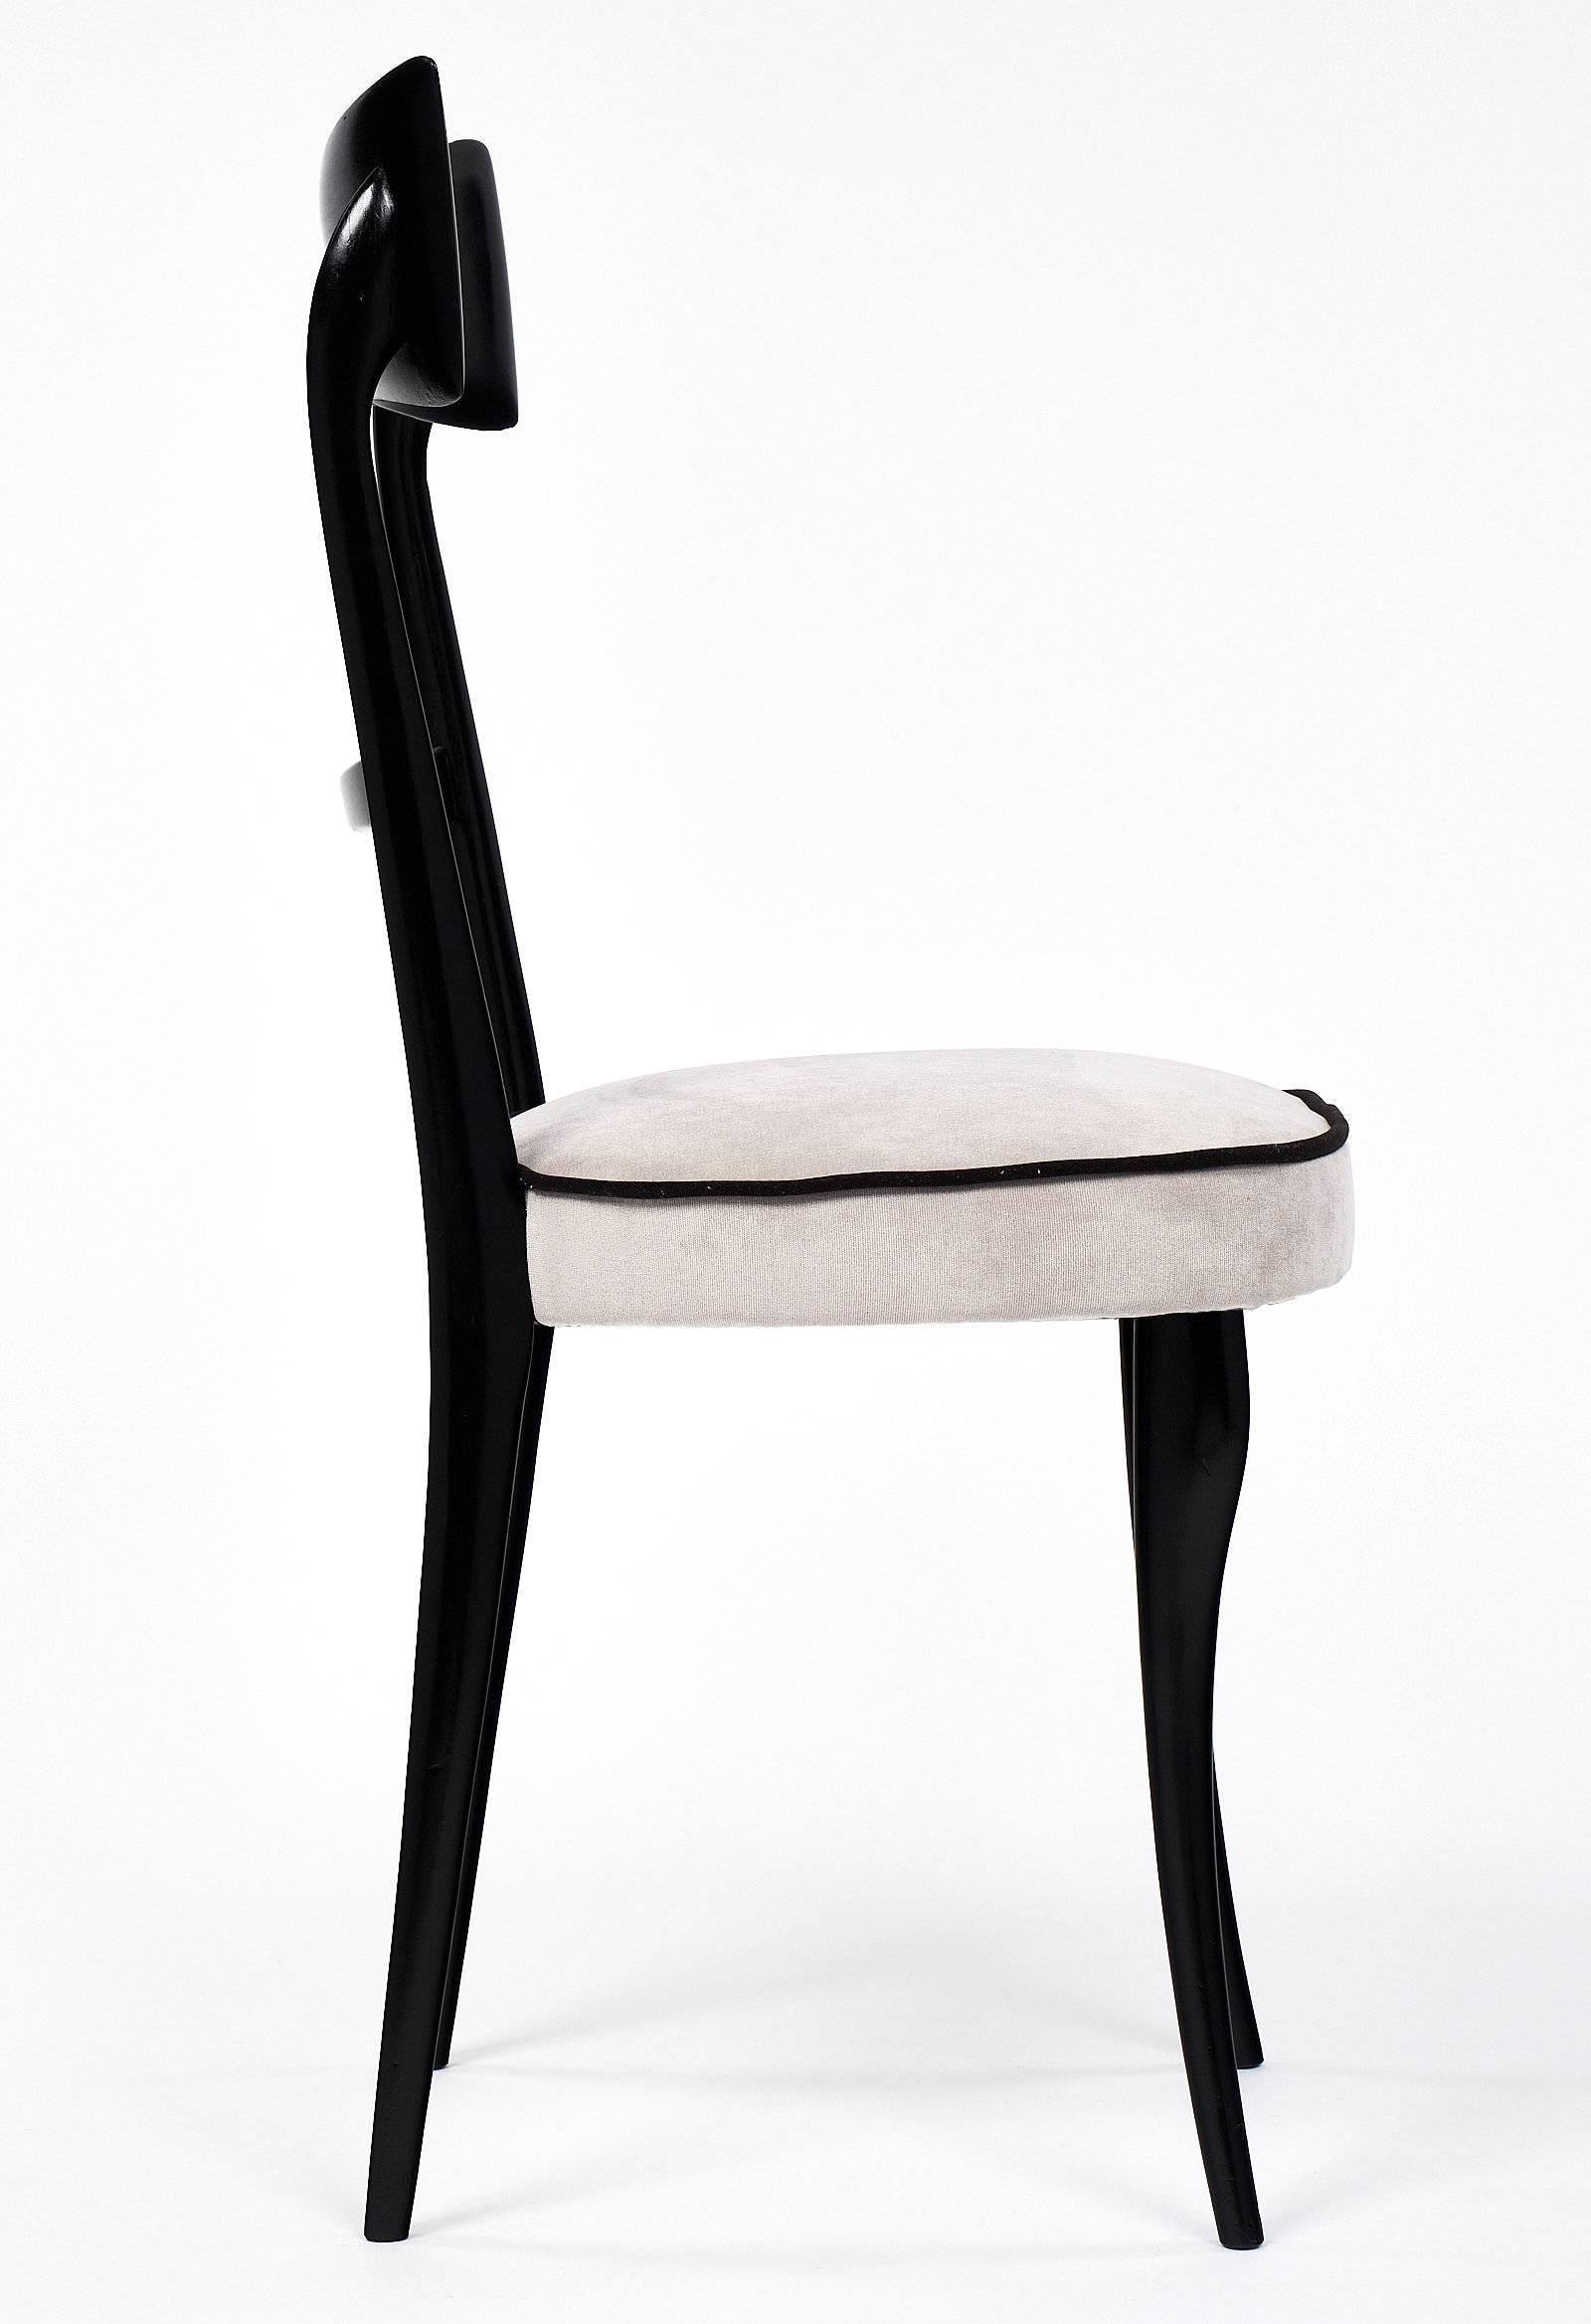 Paolo Buffa Style Italian Modernist Dining Chairs 2